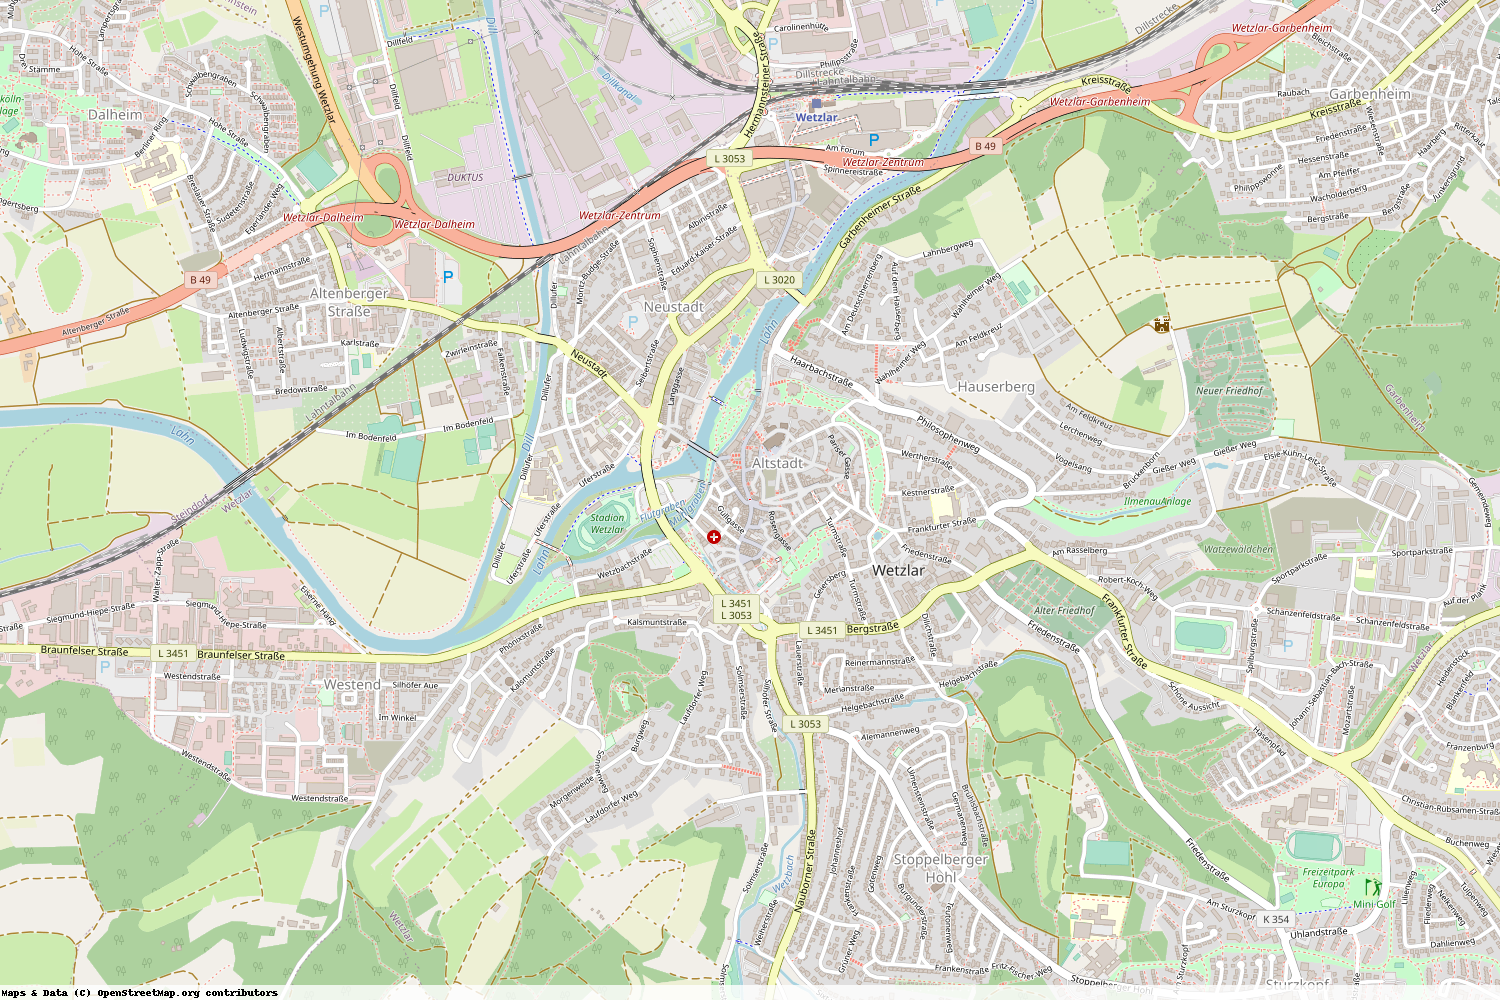 Ist gerade Stromausfall in Hessen - Lahn-Dill-Kreis - Wetzlar?